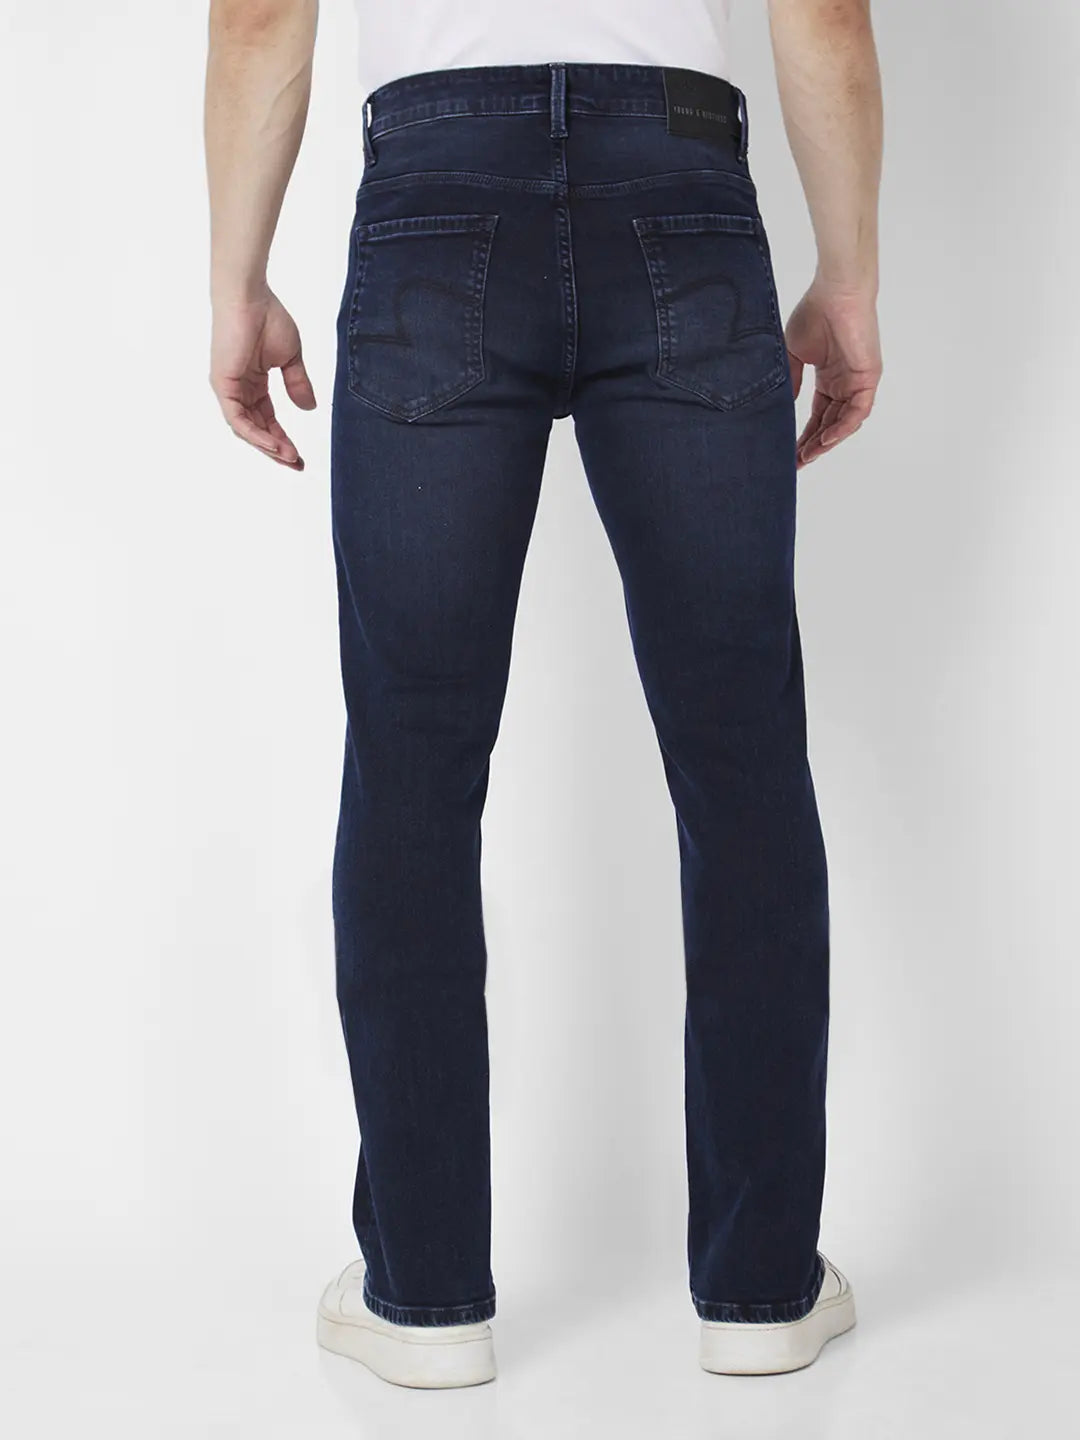 Spykar Men Blue Indigo Cotton Stretch Comfort Fit Regular Length Clean Look Mid Rise Jeans (Rafter)